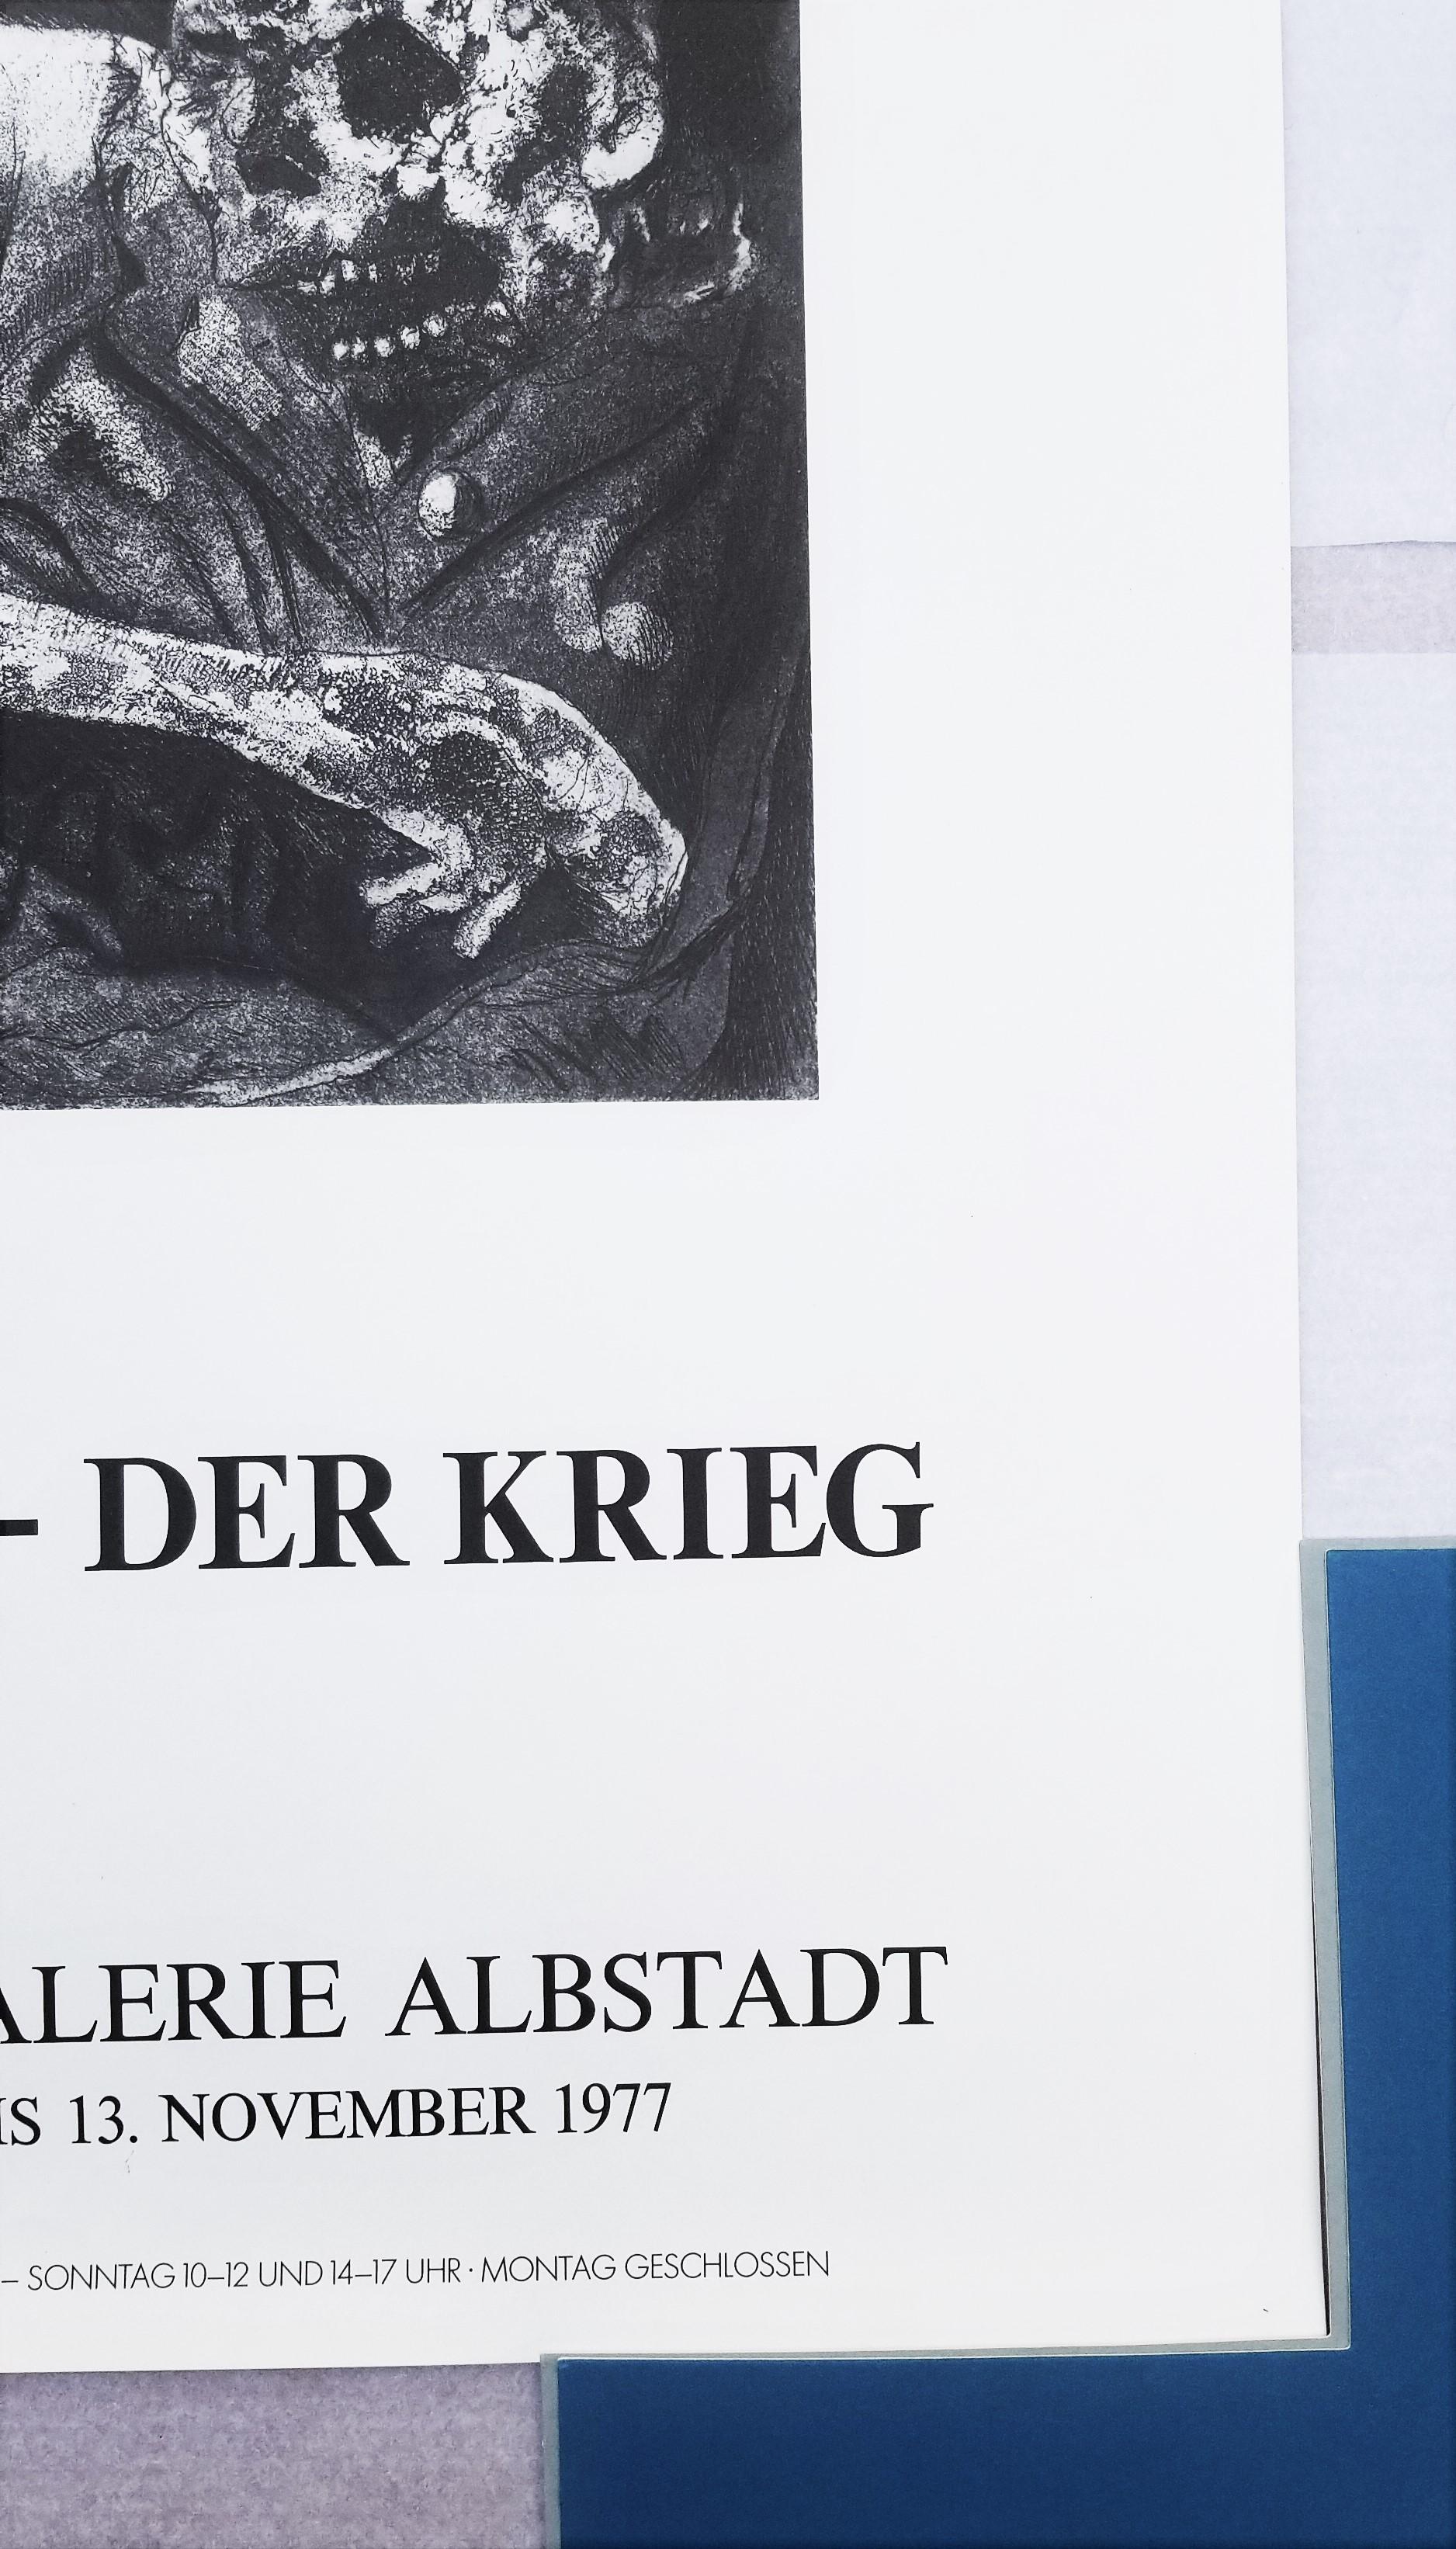 Städtische Galerie Albstadt (Corpse in Barbed Wire, Flanders) Poster - Expressionist Print by Otto Dix